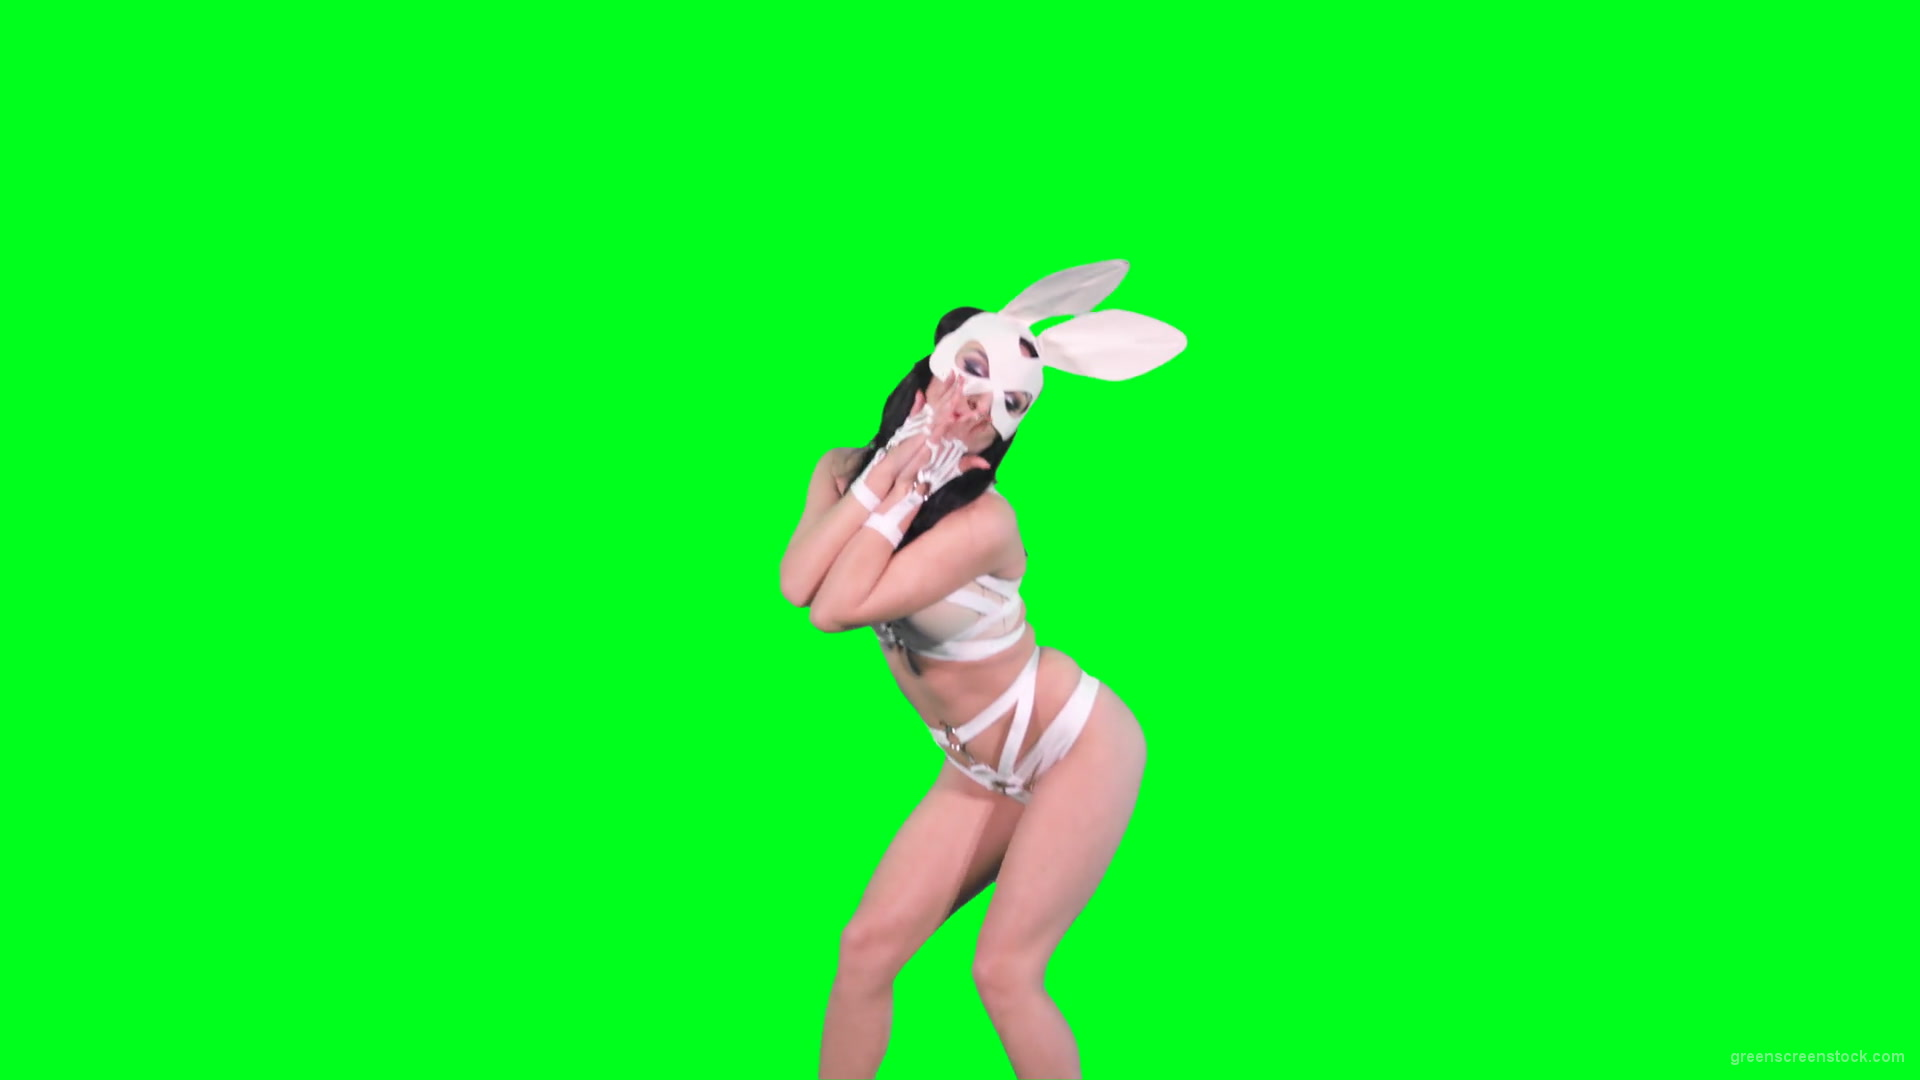 Green-Srcreen-Girl-in-rabbit-costume-sending-air-kiss-4k-Video-Footage-1920_008 Green Screen Stock